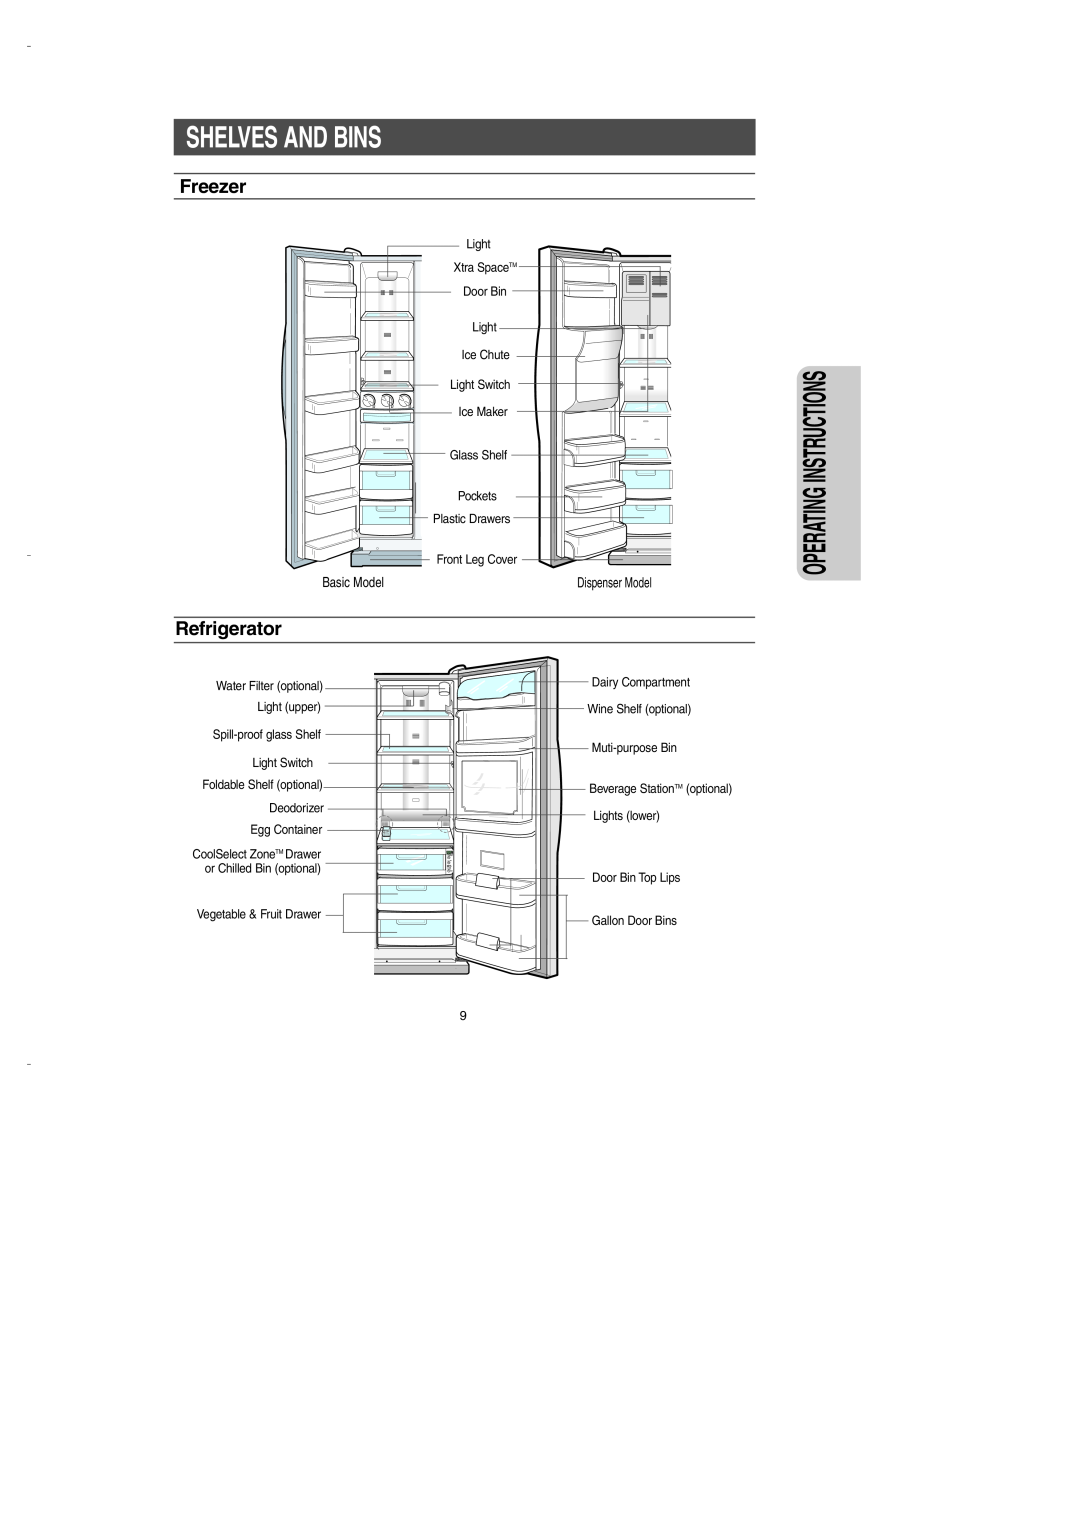 Samsung DA99-00275B owner manual Shelves And Bins, Freezer, Refrigerator, Basic Model, Operating Instructions 